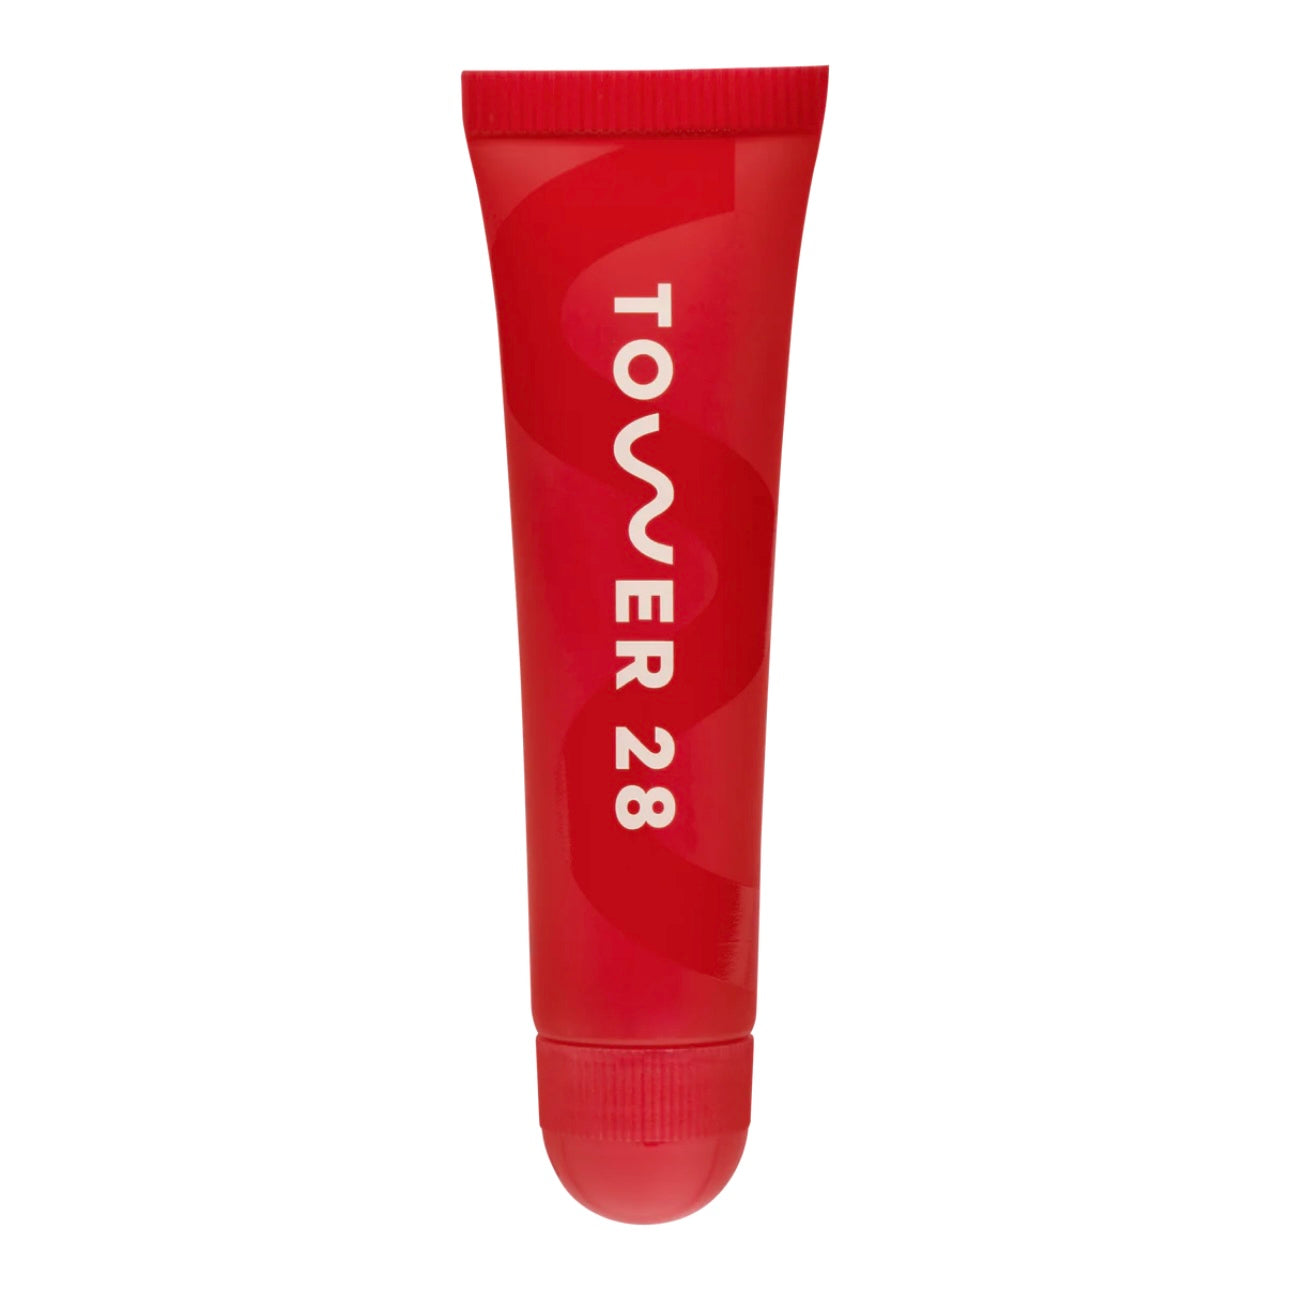 Tower28 Beauty LipSoftie™ Hydrating Tinted Lip Treatment Balm : Blood Orange Vanilla